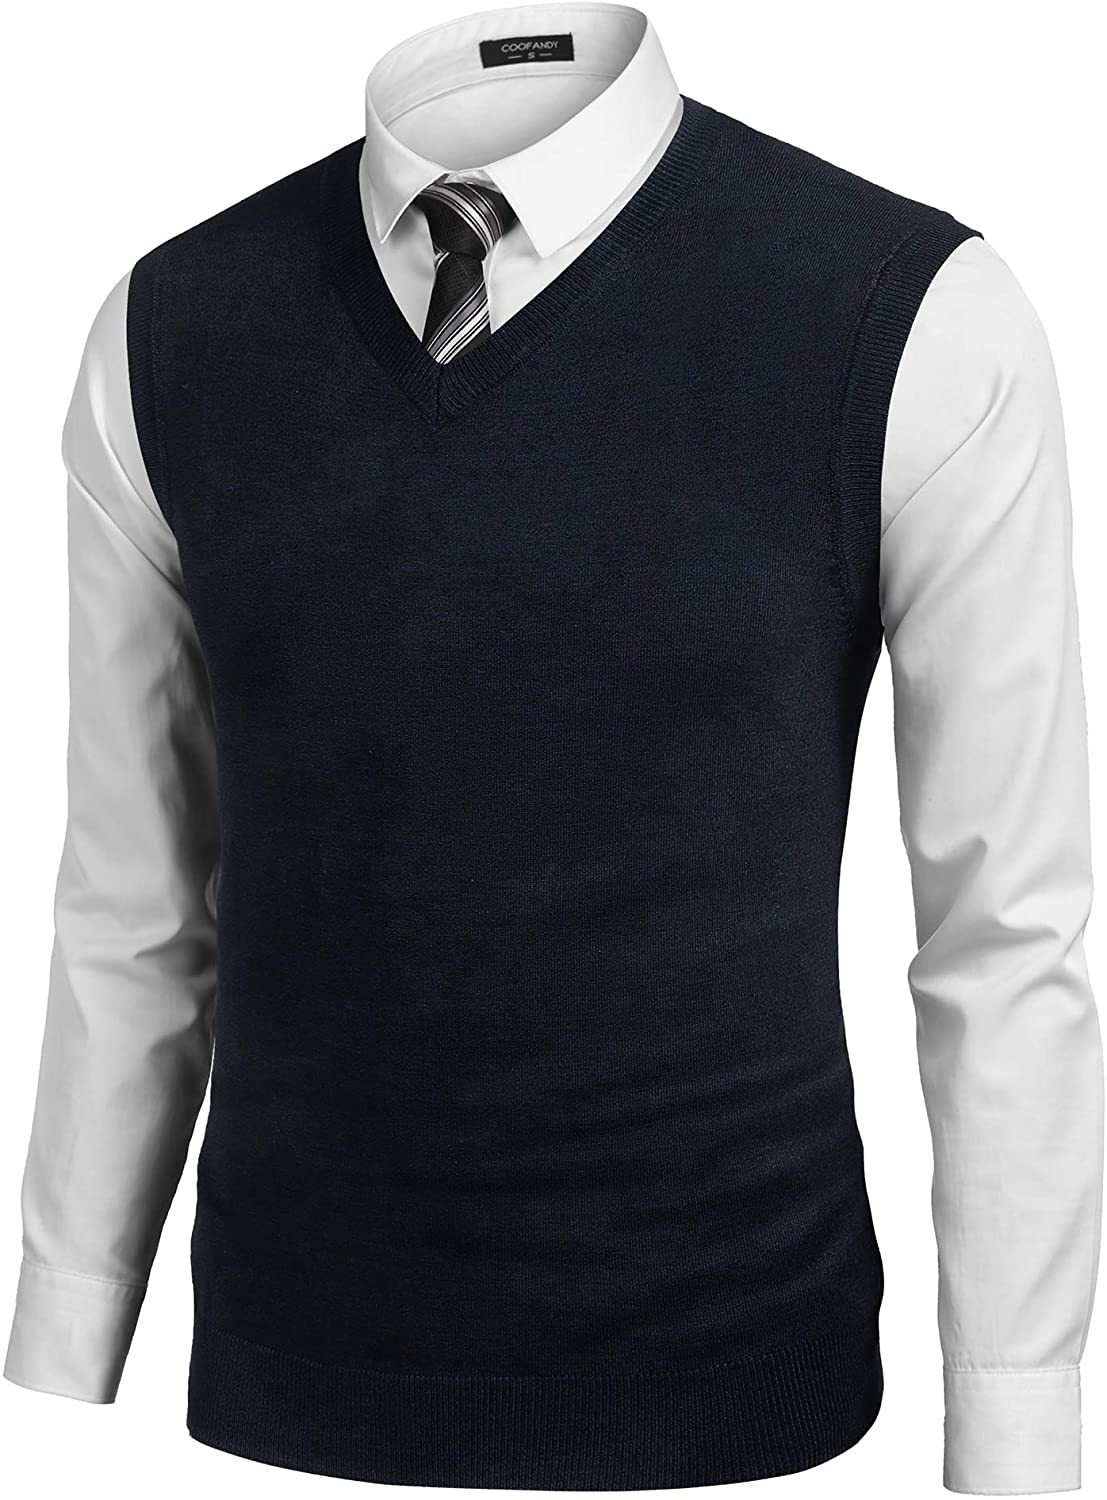 COOFANDY Men's Sleeveless Sweater Vest Lightweight V-Neck Solid 